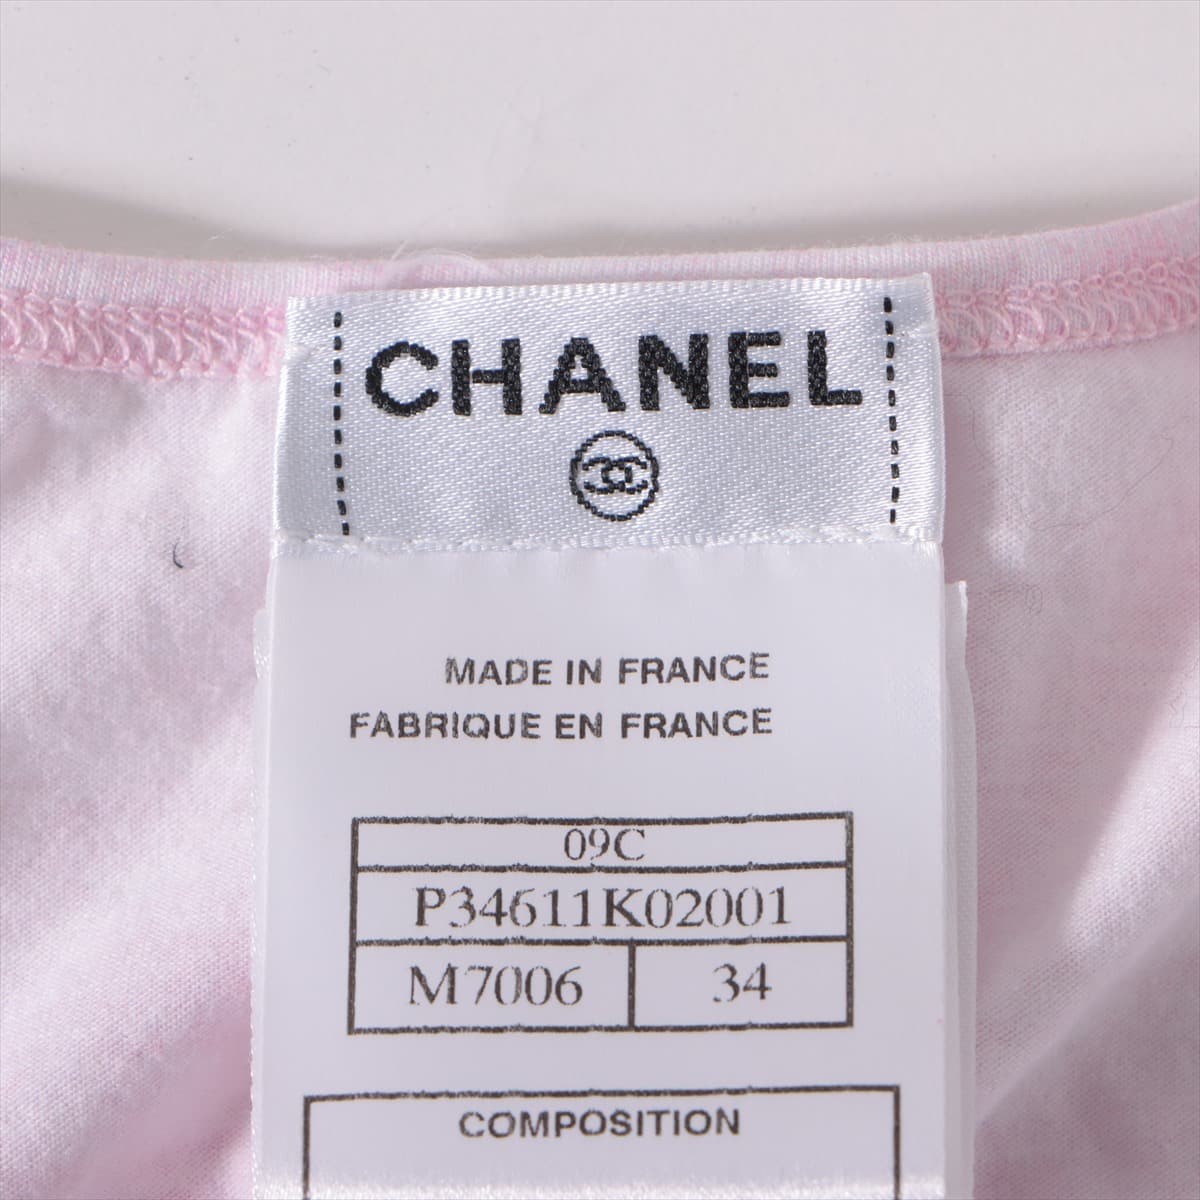 Chanel Coco Mark 09C Cotton T-shirt 34 Ladies' Pink